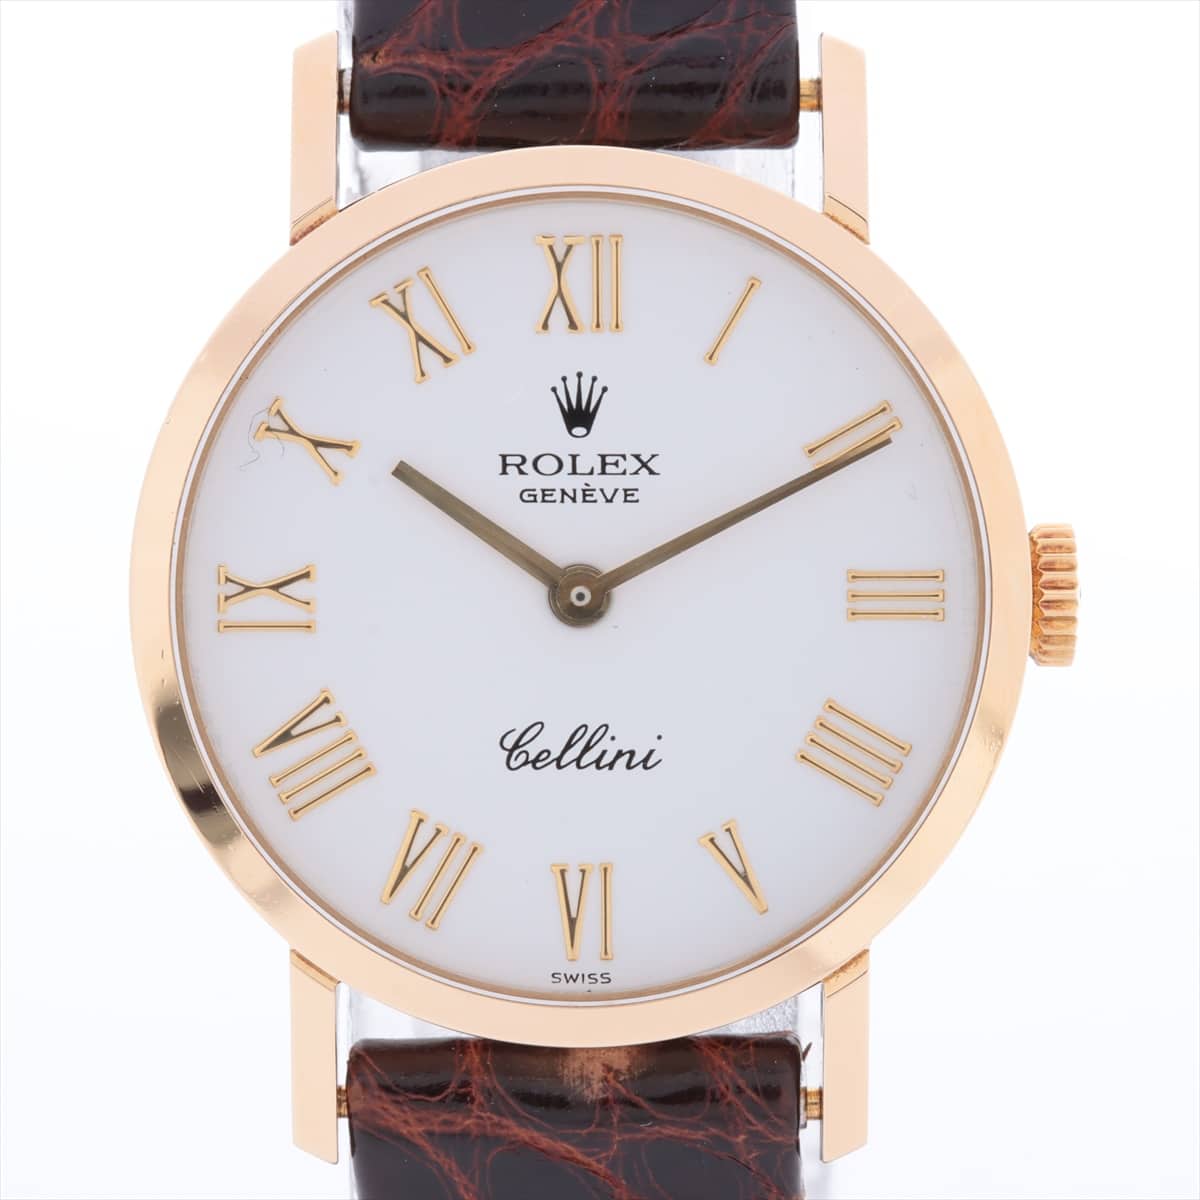 Rolex Cellini 4109 750 & leather Stem-winder White-Face